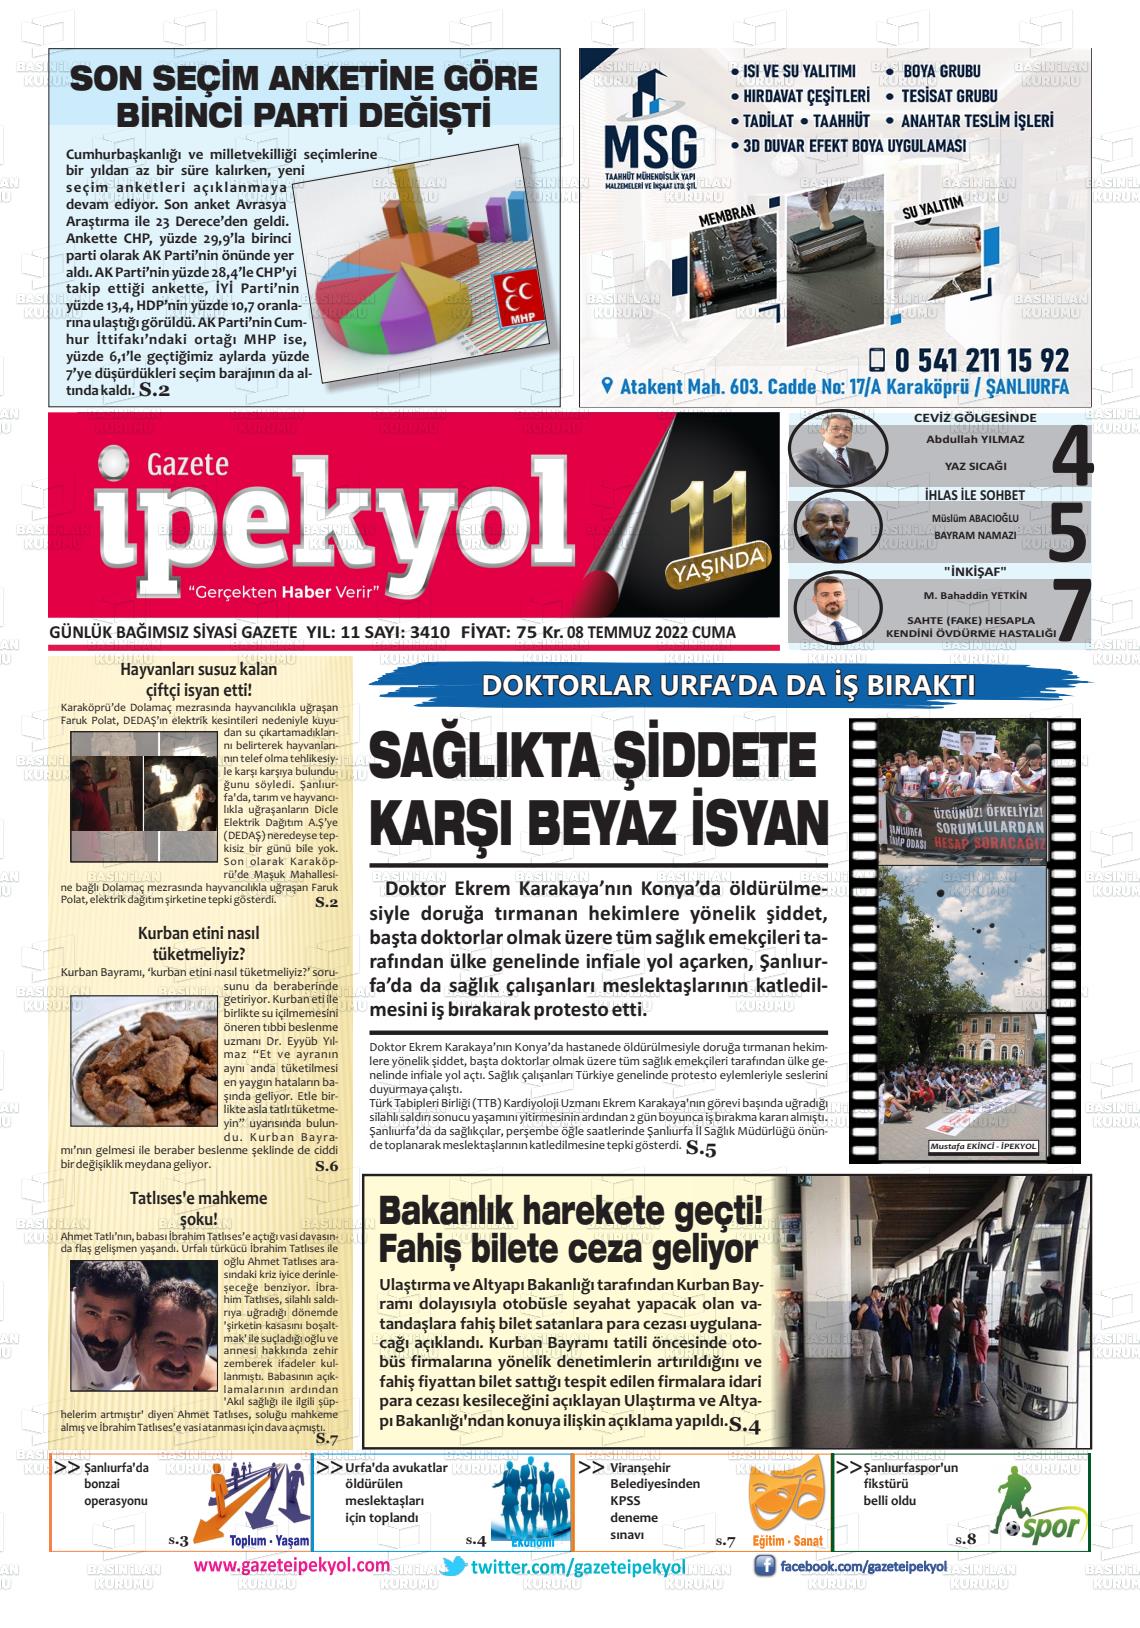 08 Temmuz 2022 Gazete İpekyol Gazete Manşeti